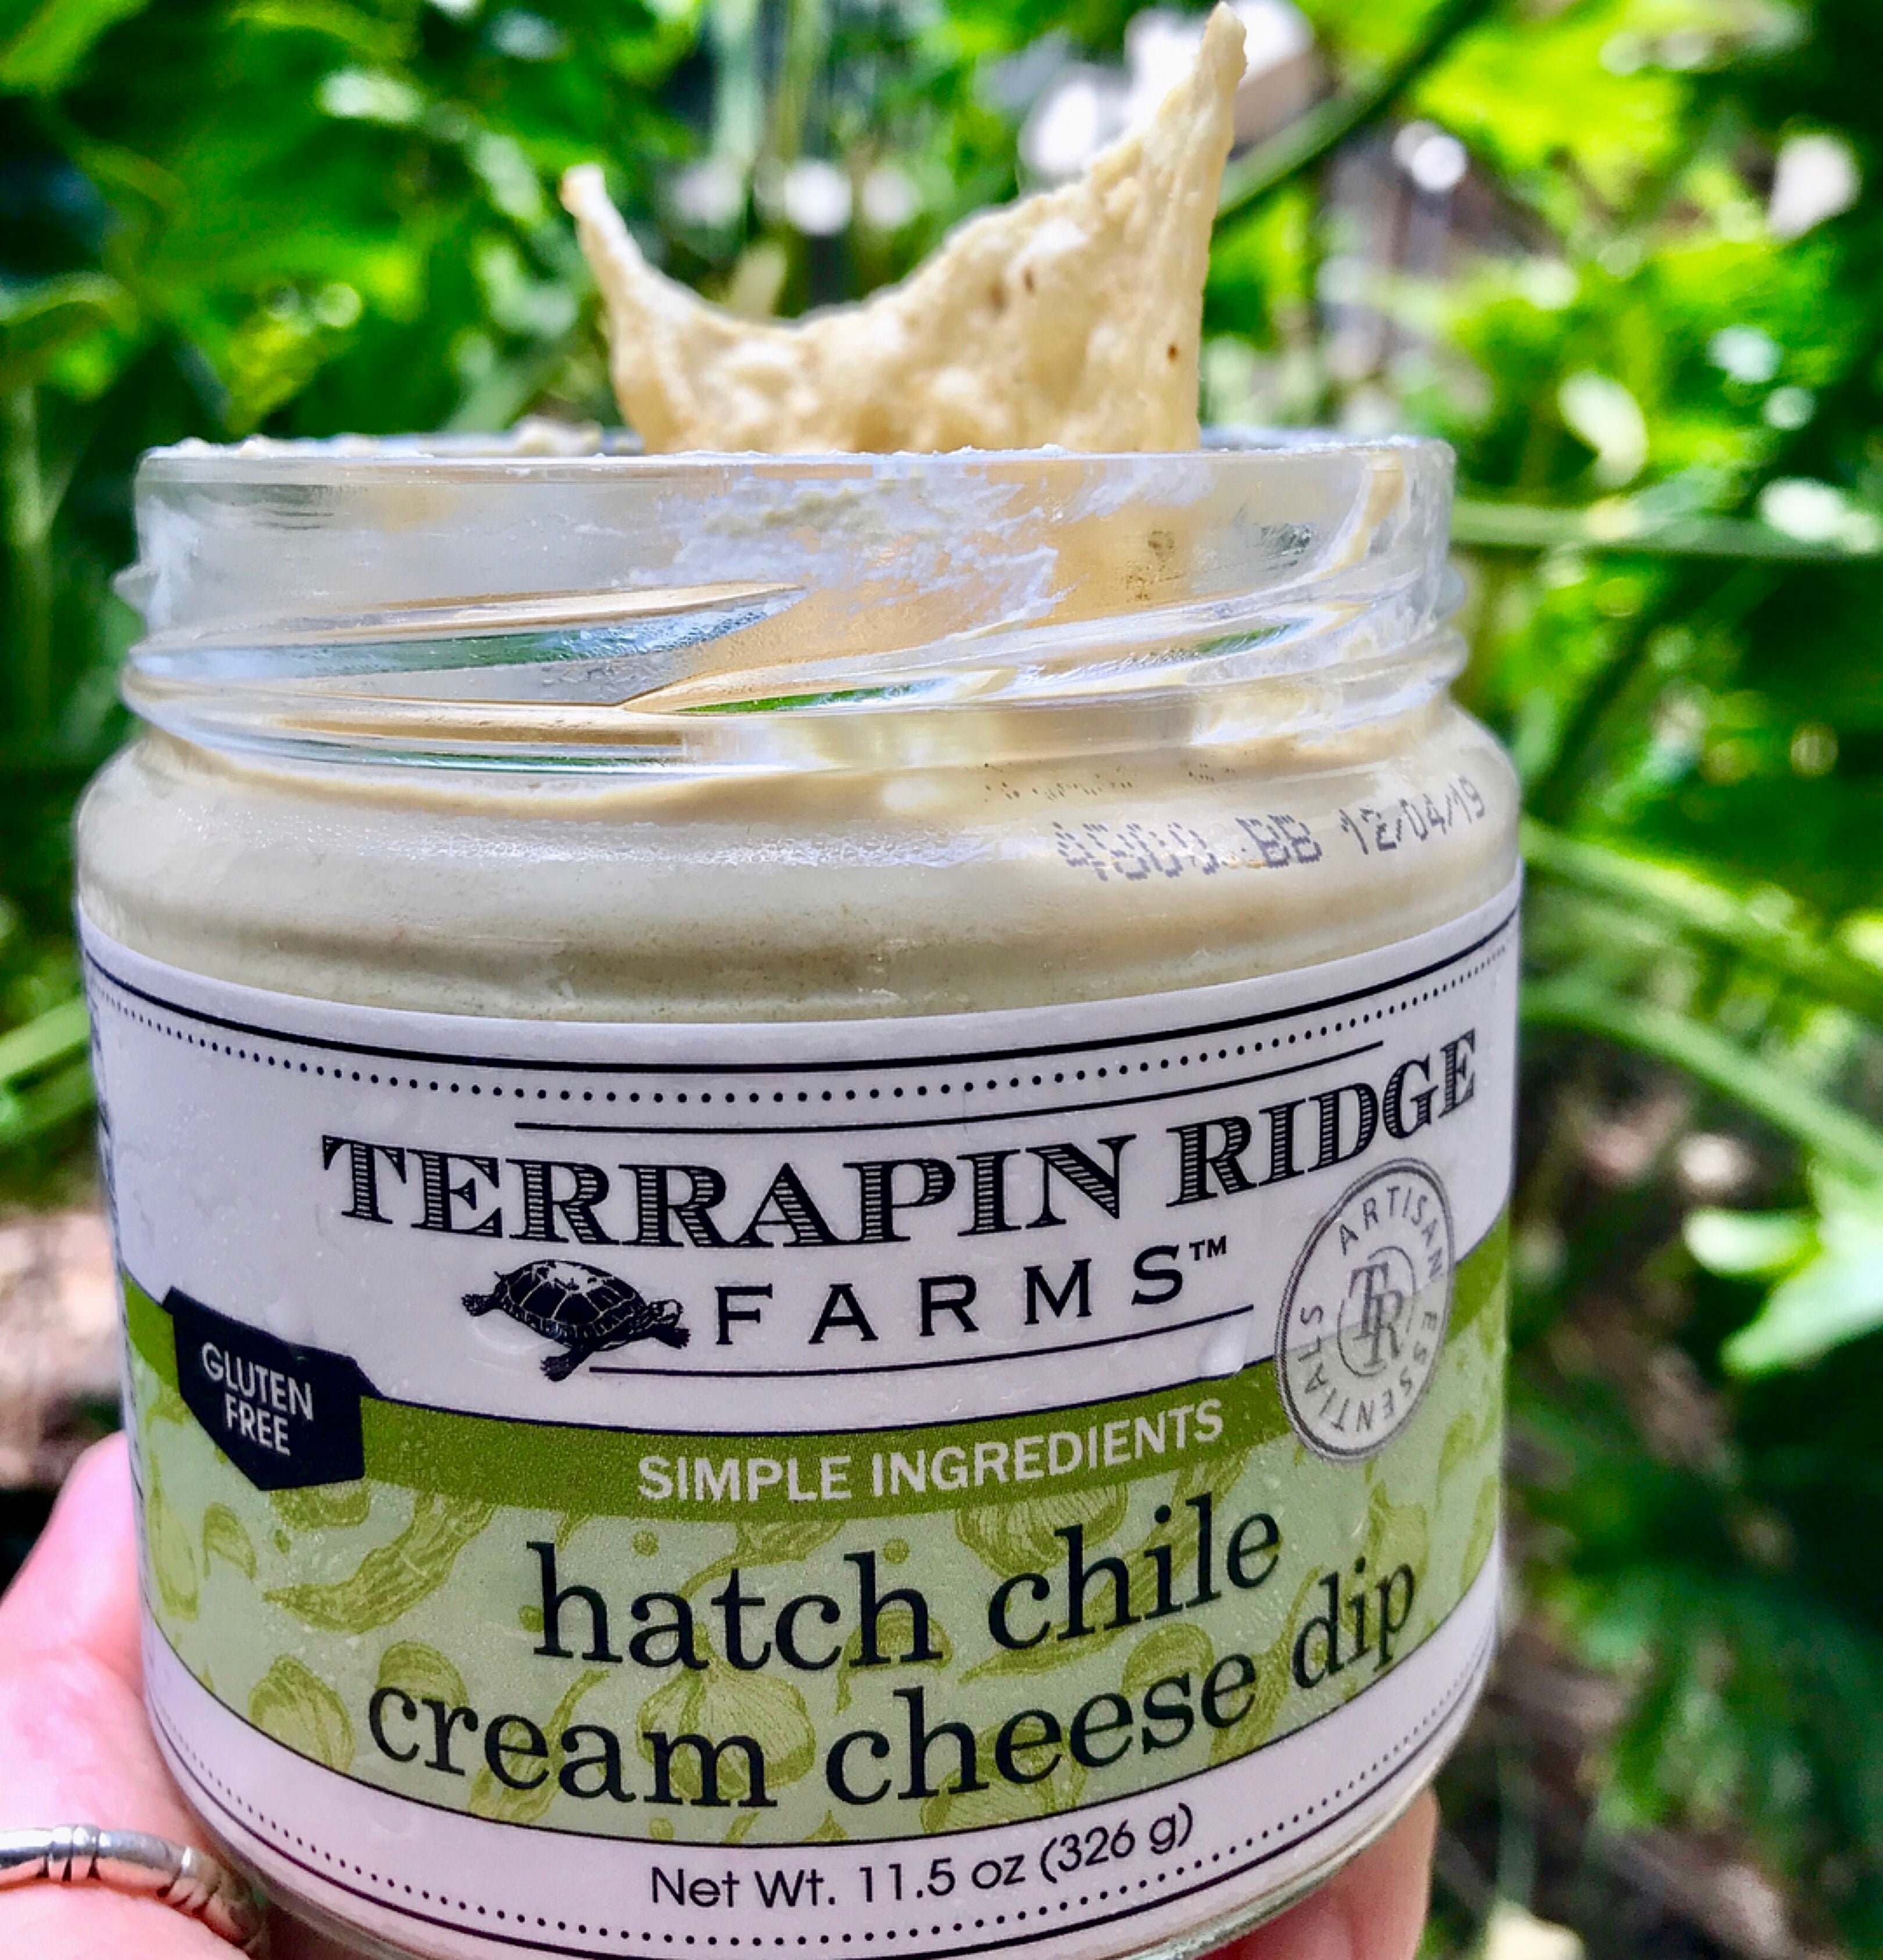 Hatch Chile Cream Cheese Dip